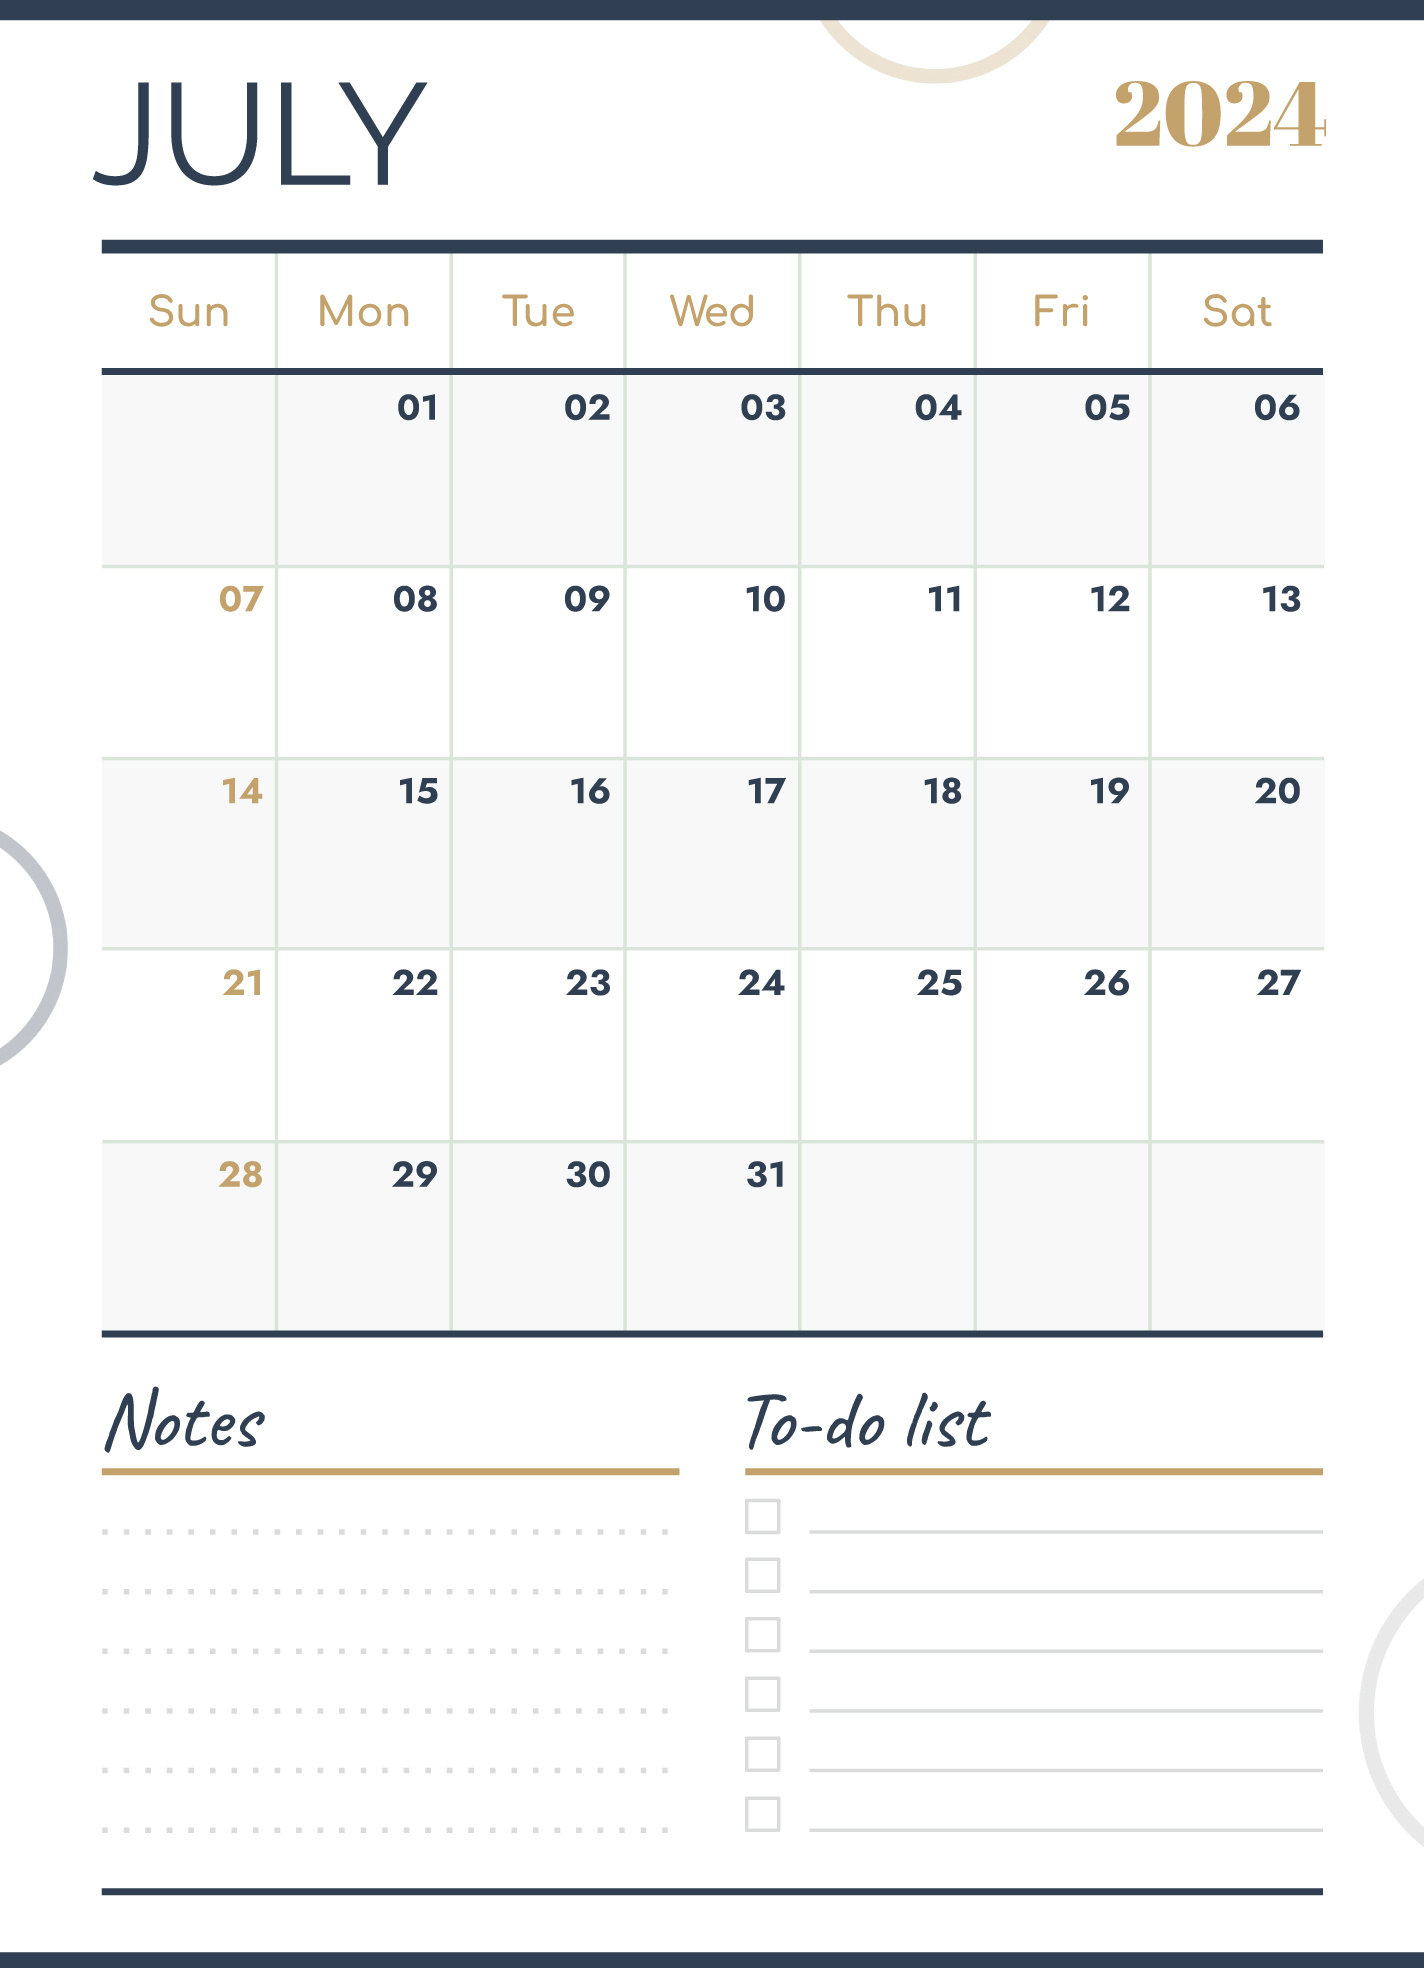 July 2024 Calendar Free Google Docs Template - Gdoc.io pertaining to July 2024 Calendar Word Doc